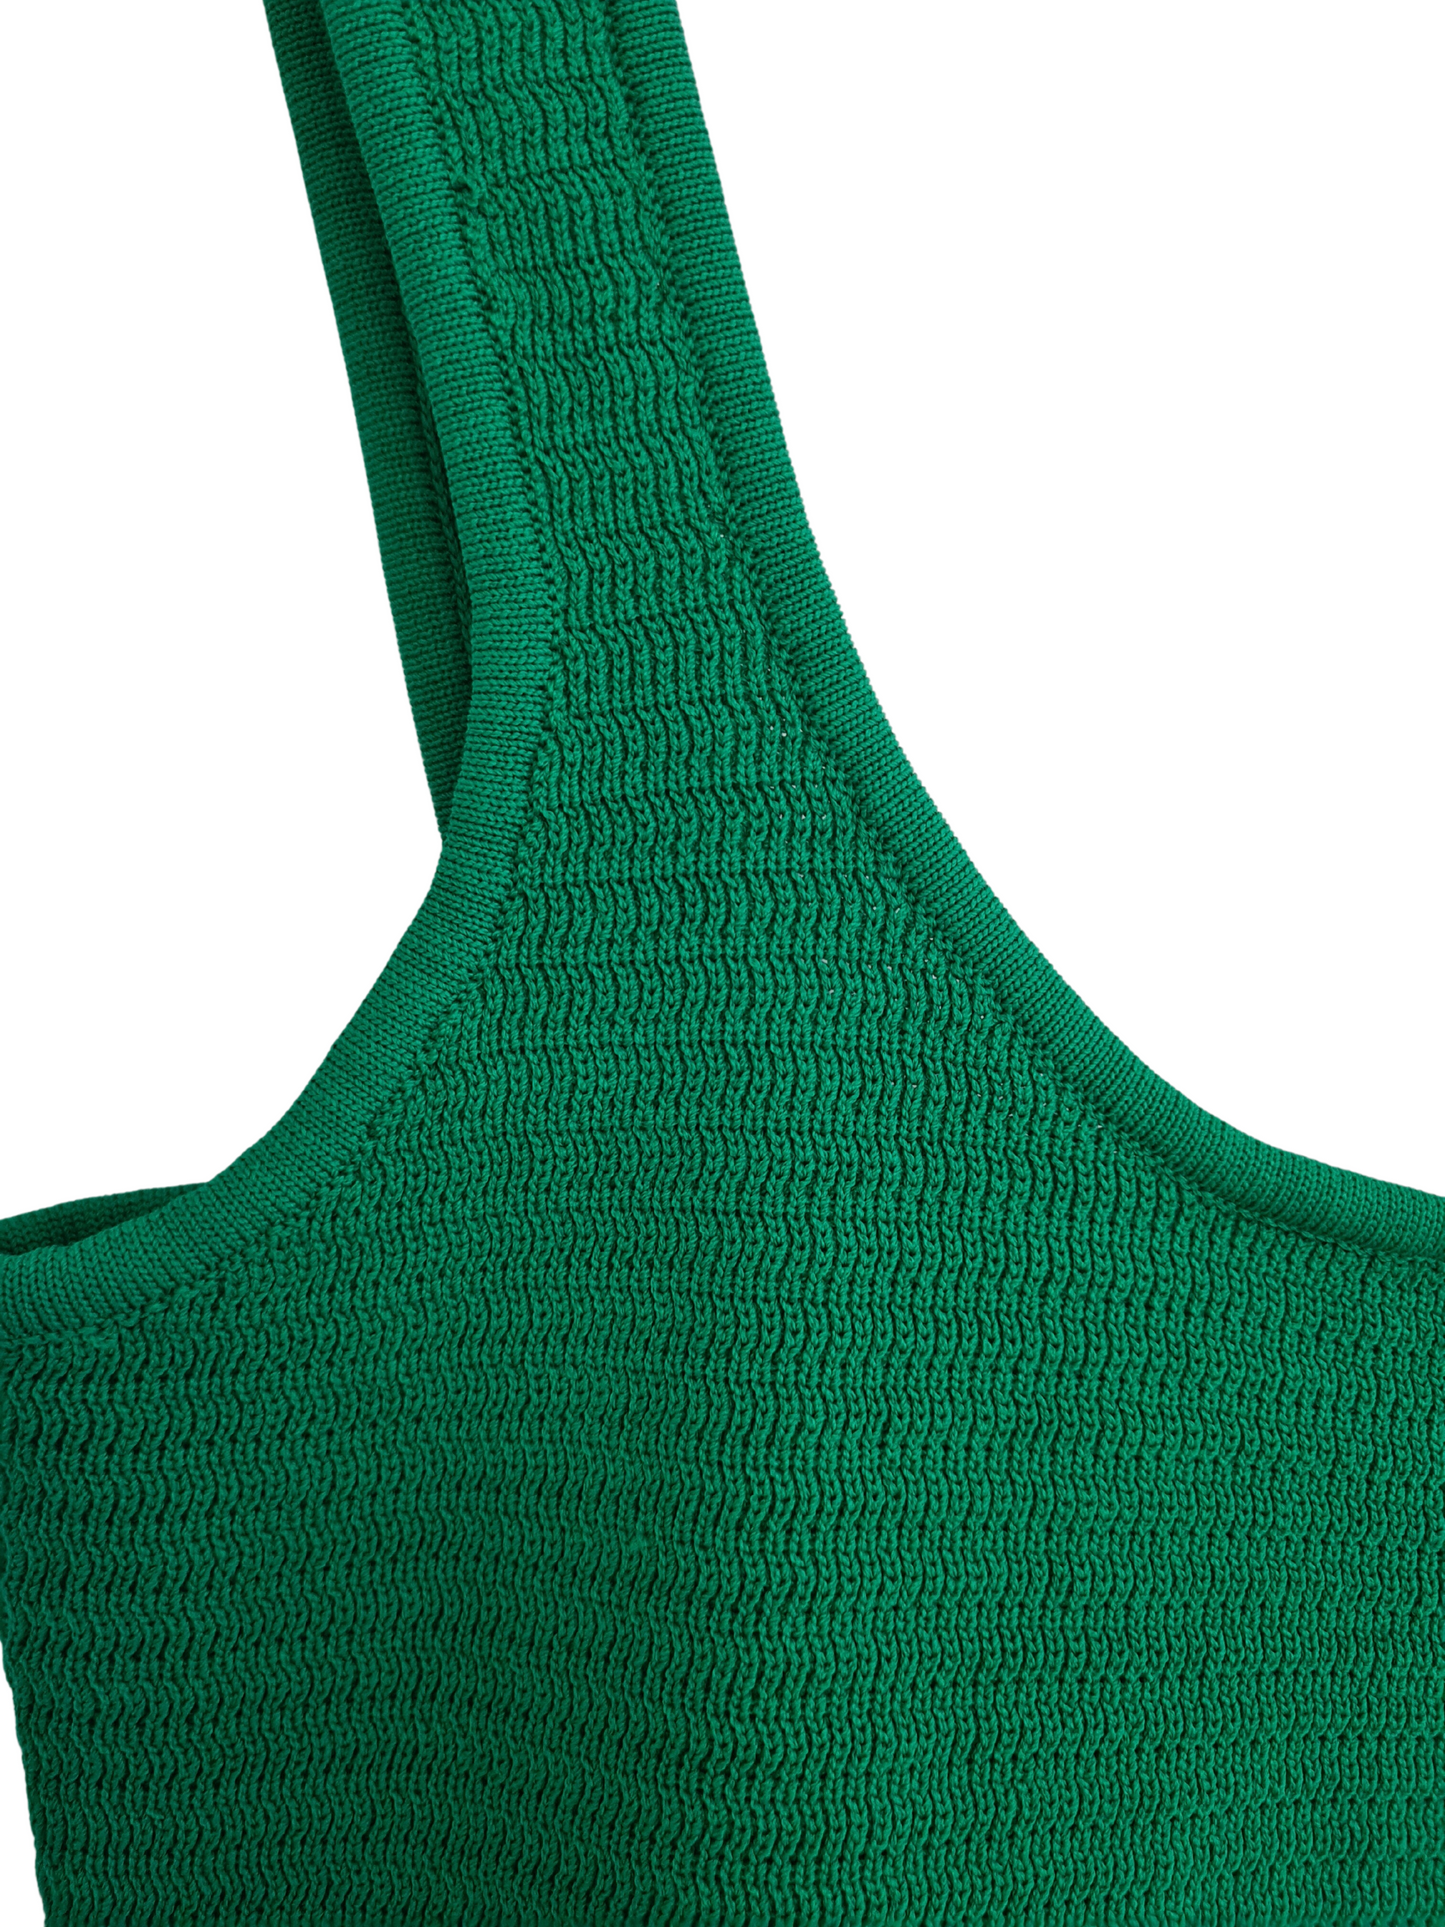 Emerald Knit Top